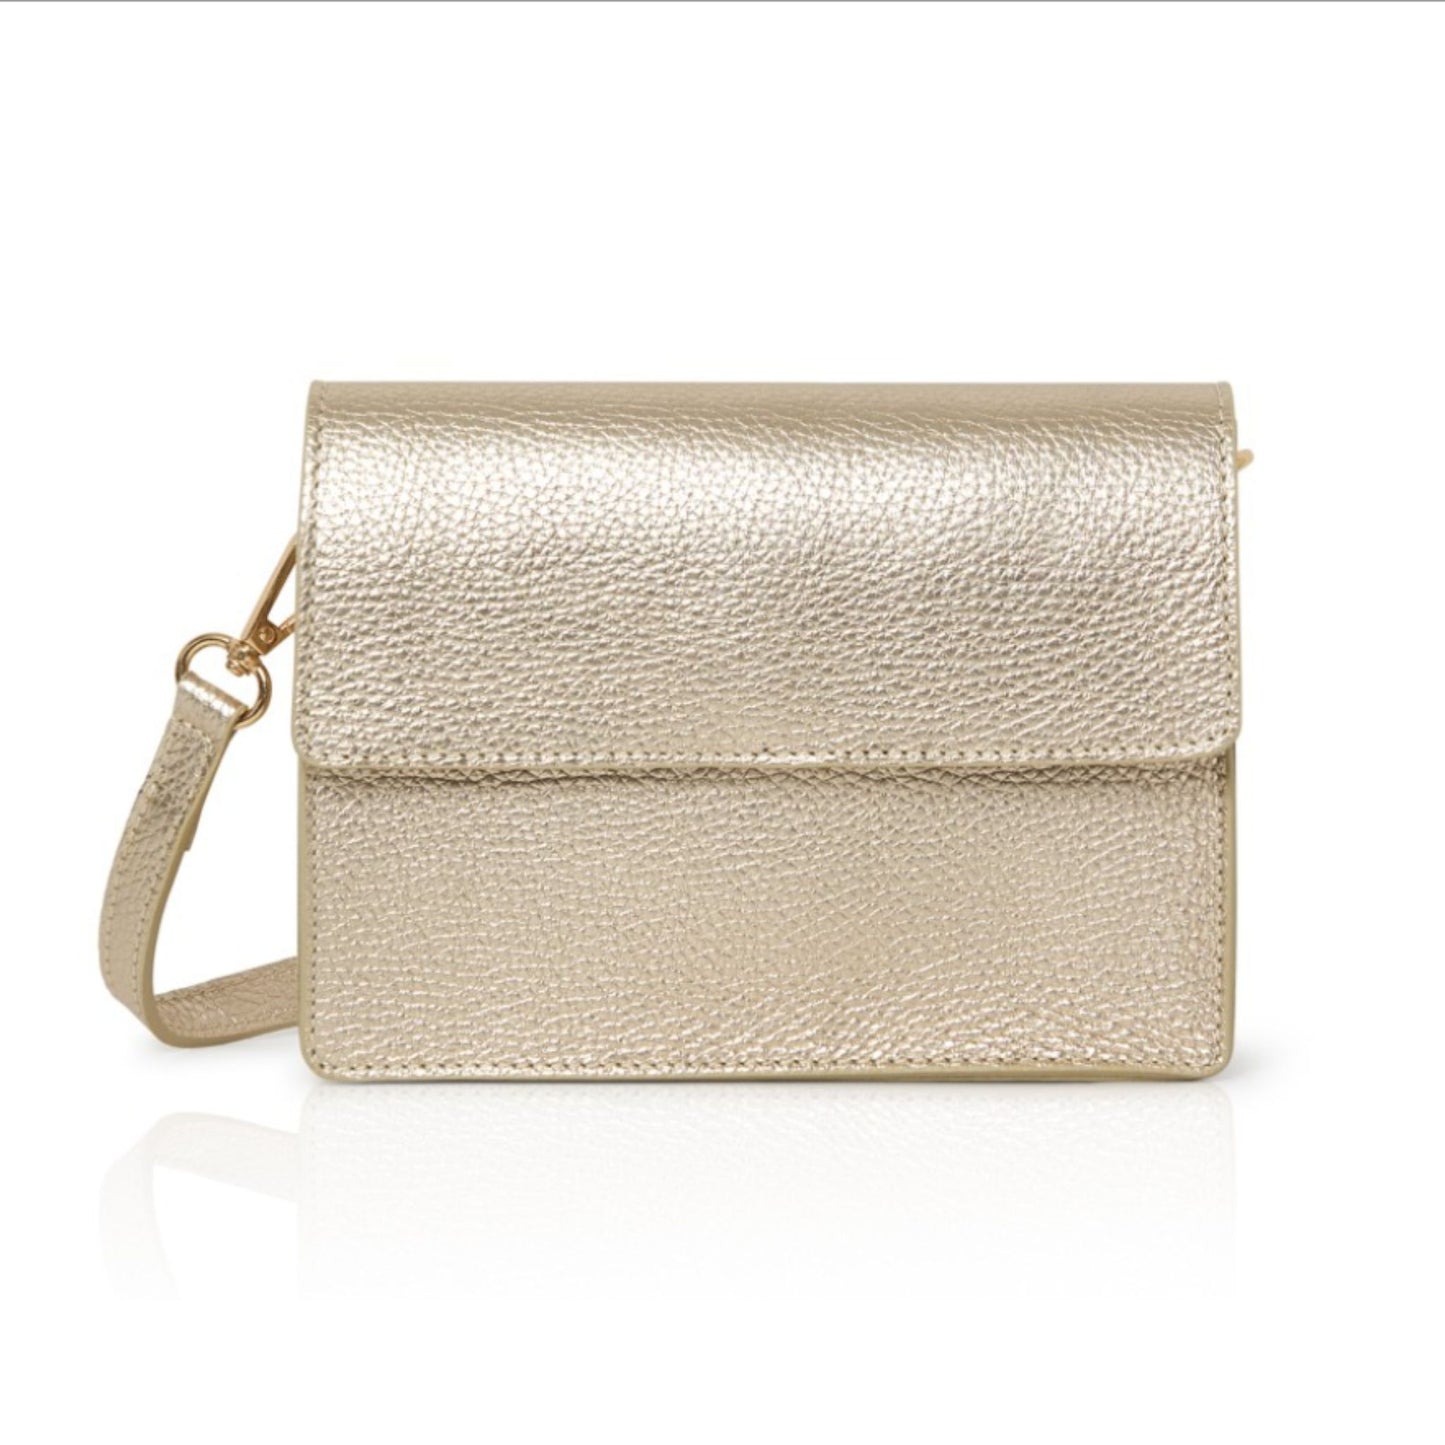 Scarlett - Gold Leather Crossbody Bag